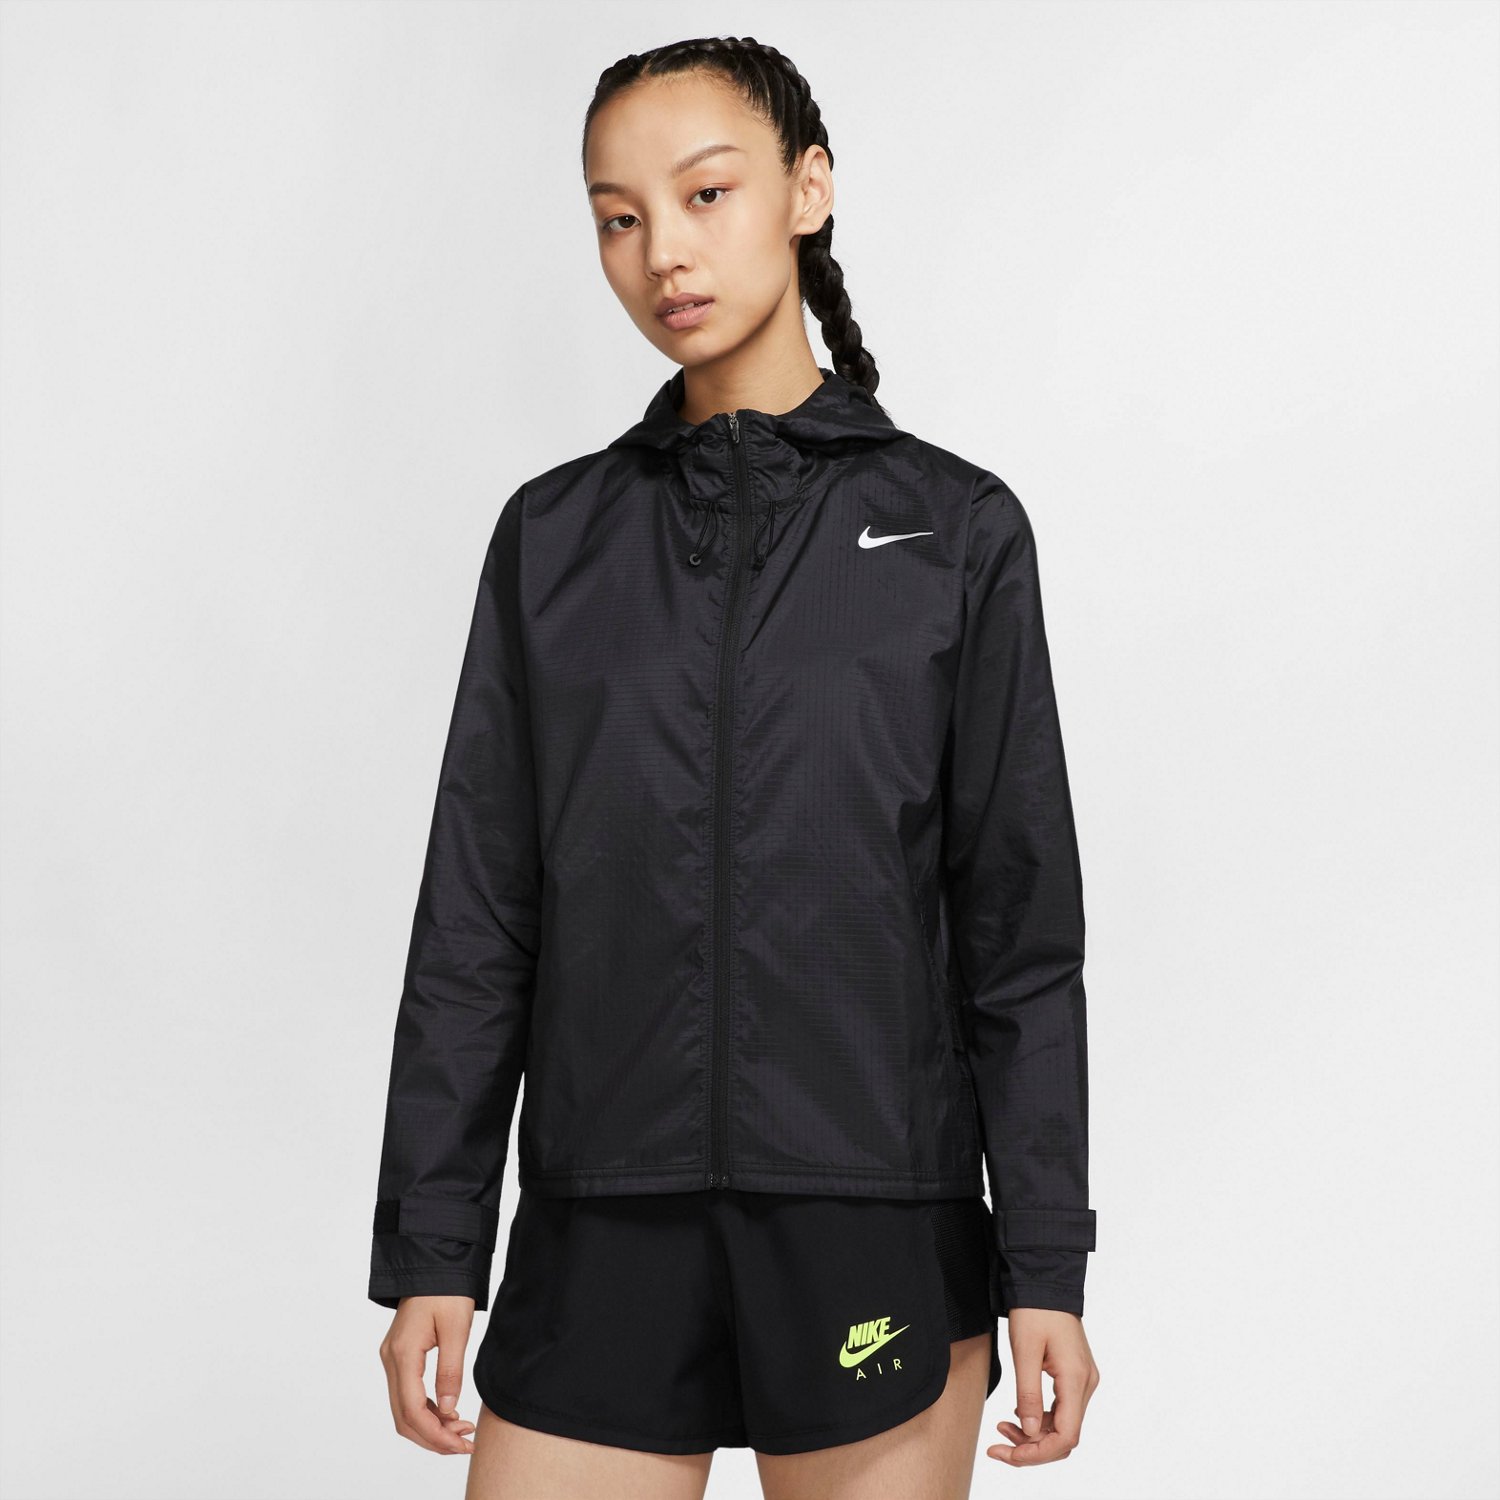 Nike Women's Essential Running Jacket | Academy